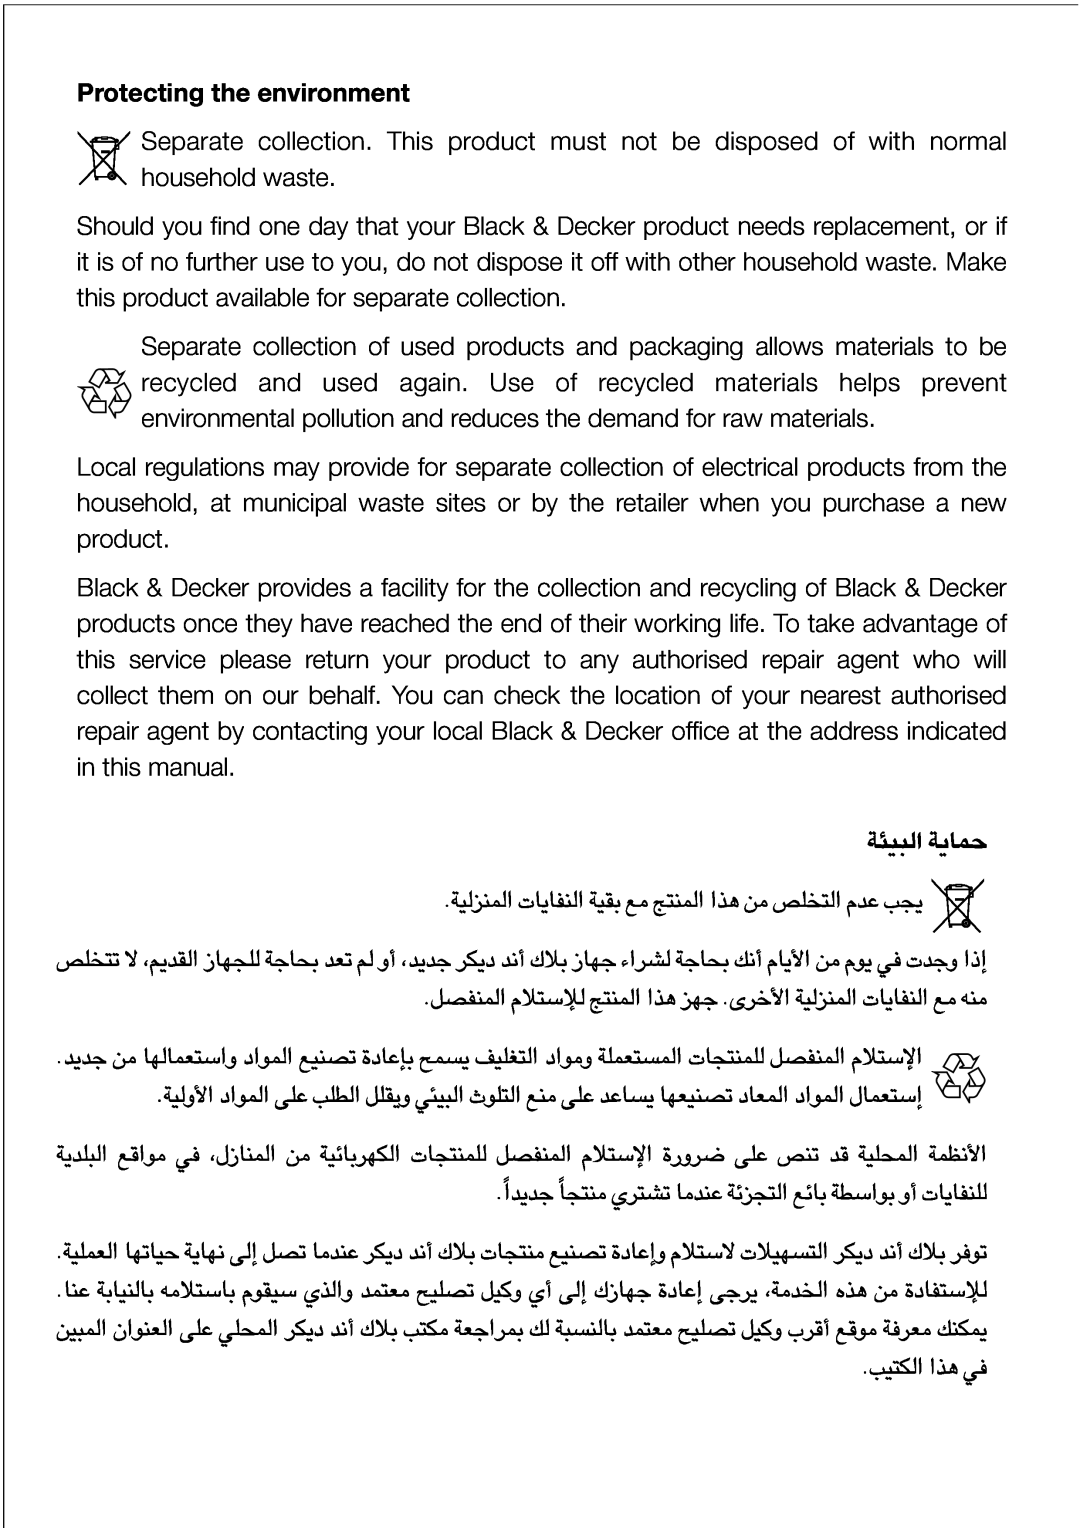 Black & Decker DCM85 manual Protecting the environment 